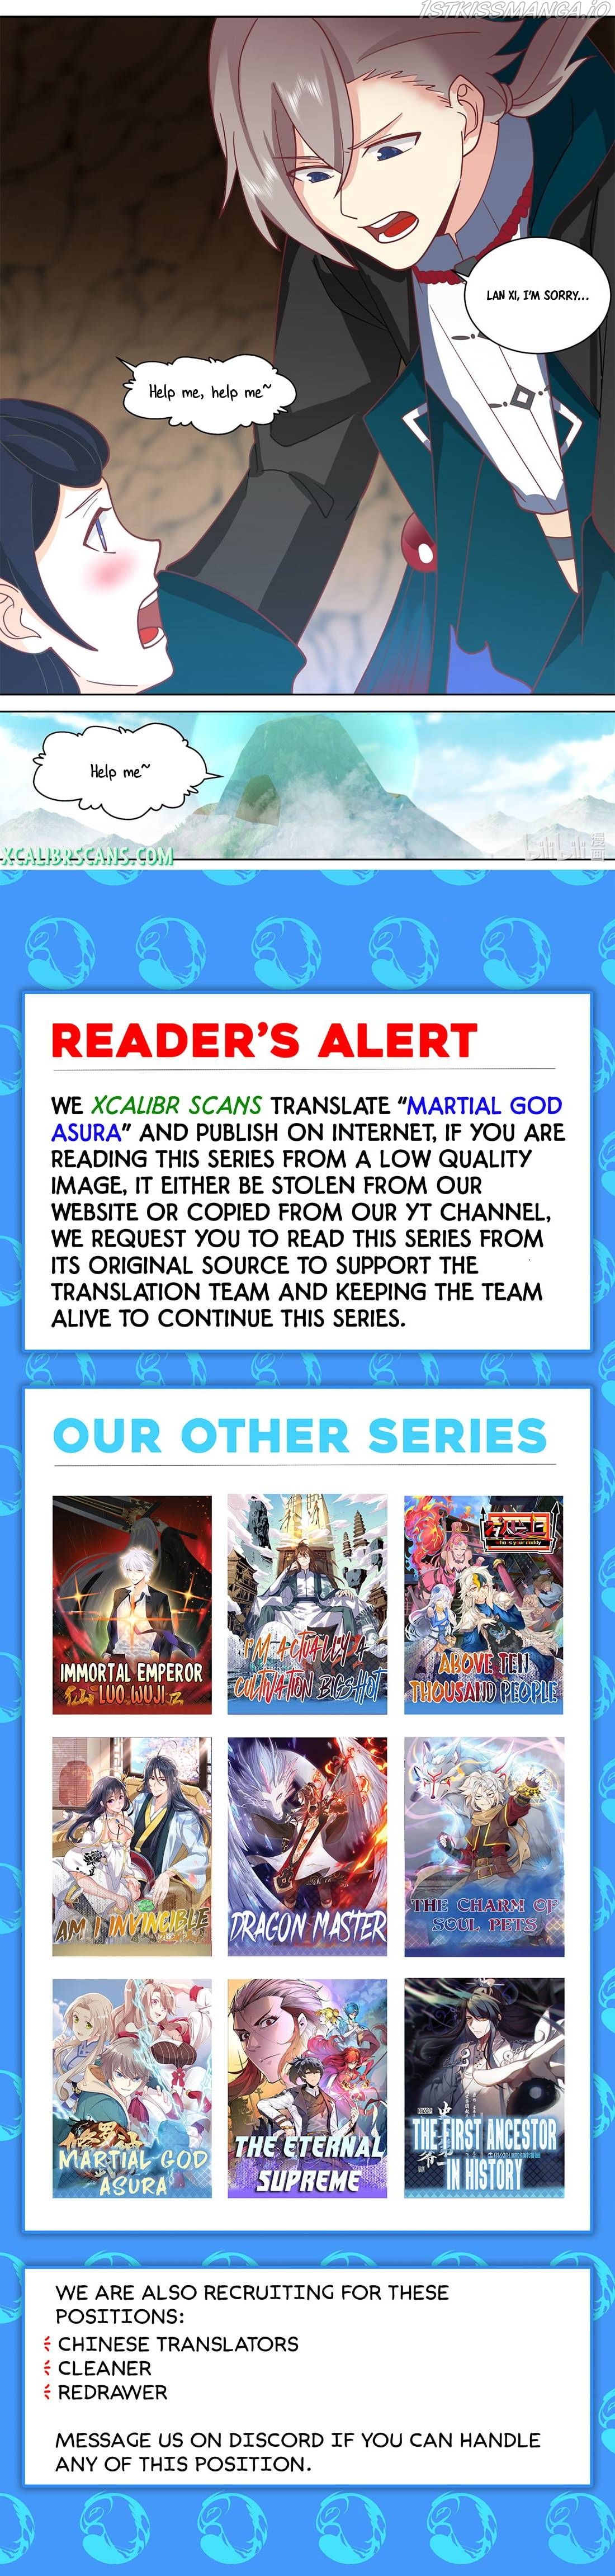 Martial God Asura Chapter 499 - Page 9